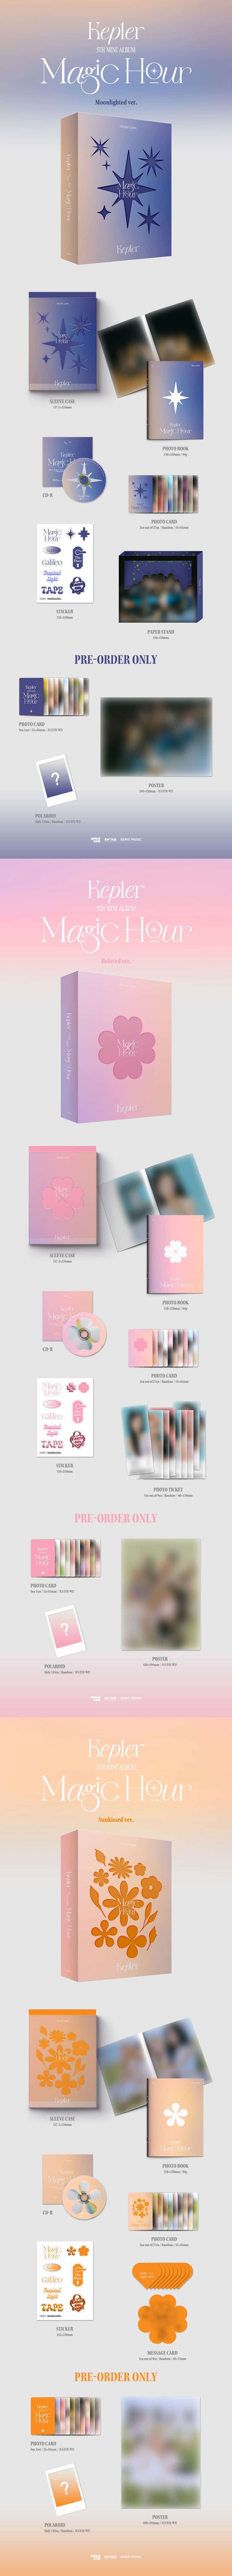 kep1er-mini-5th-album-magic-hour-wholesales